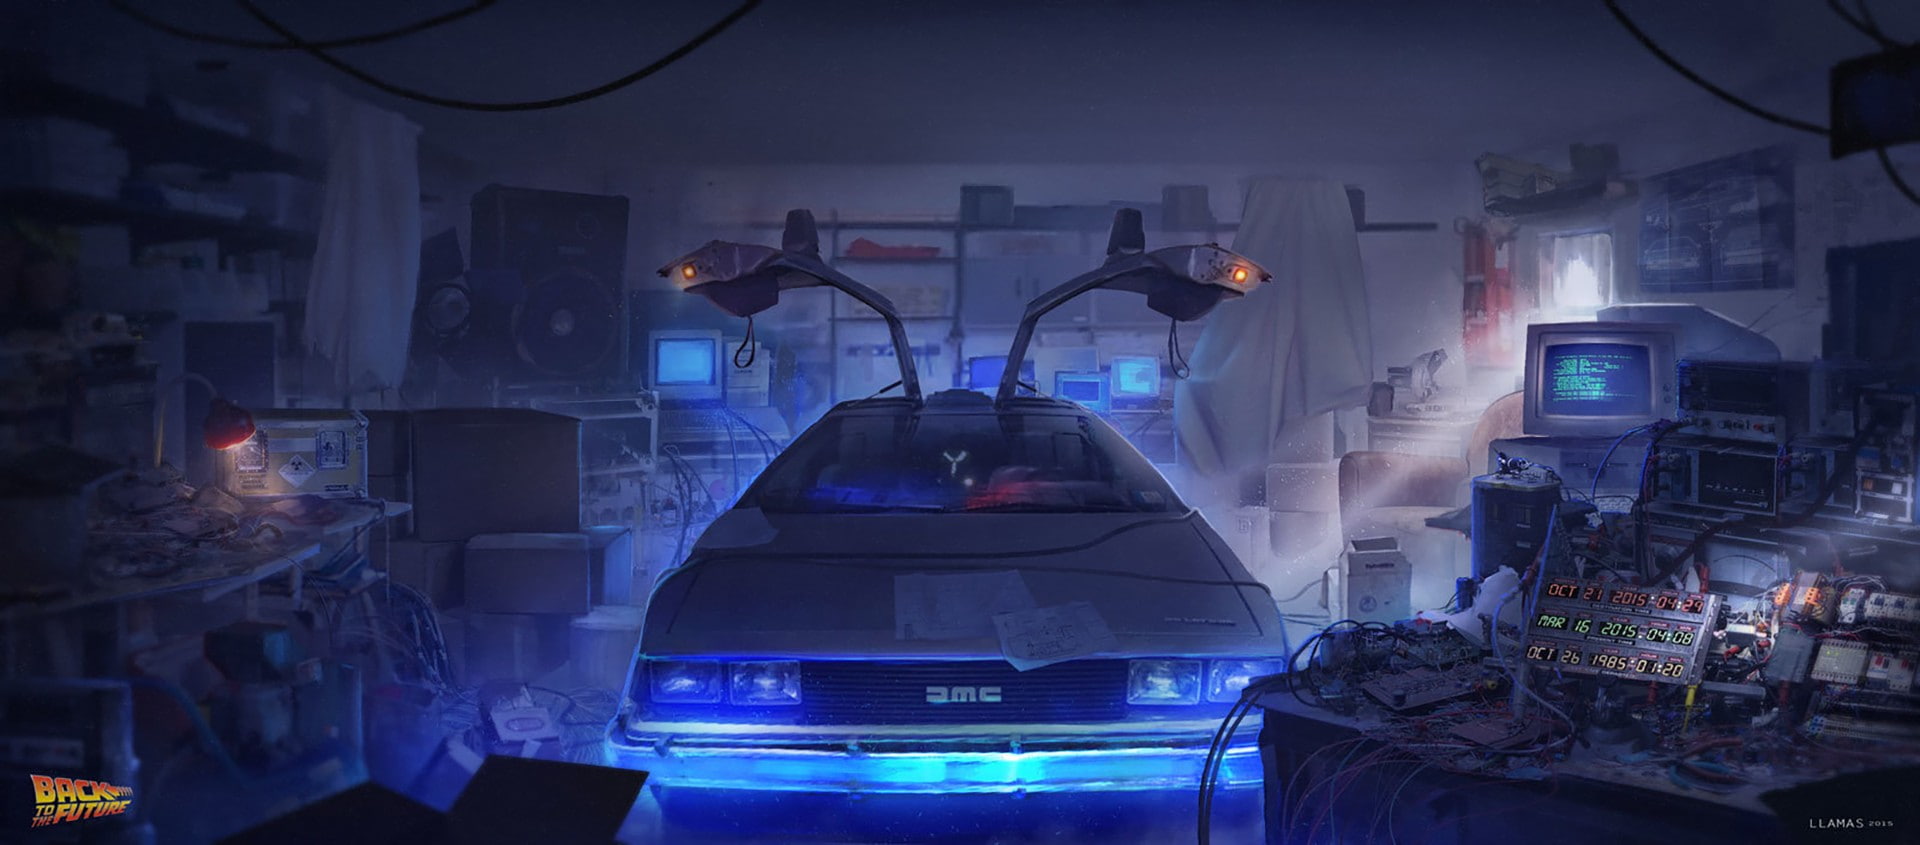 Back to the Future, DeLorean, time travel, digital art